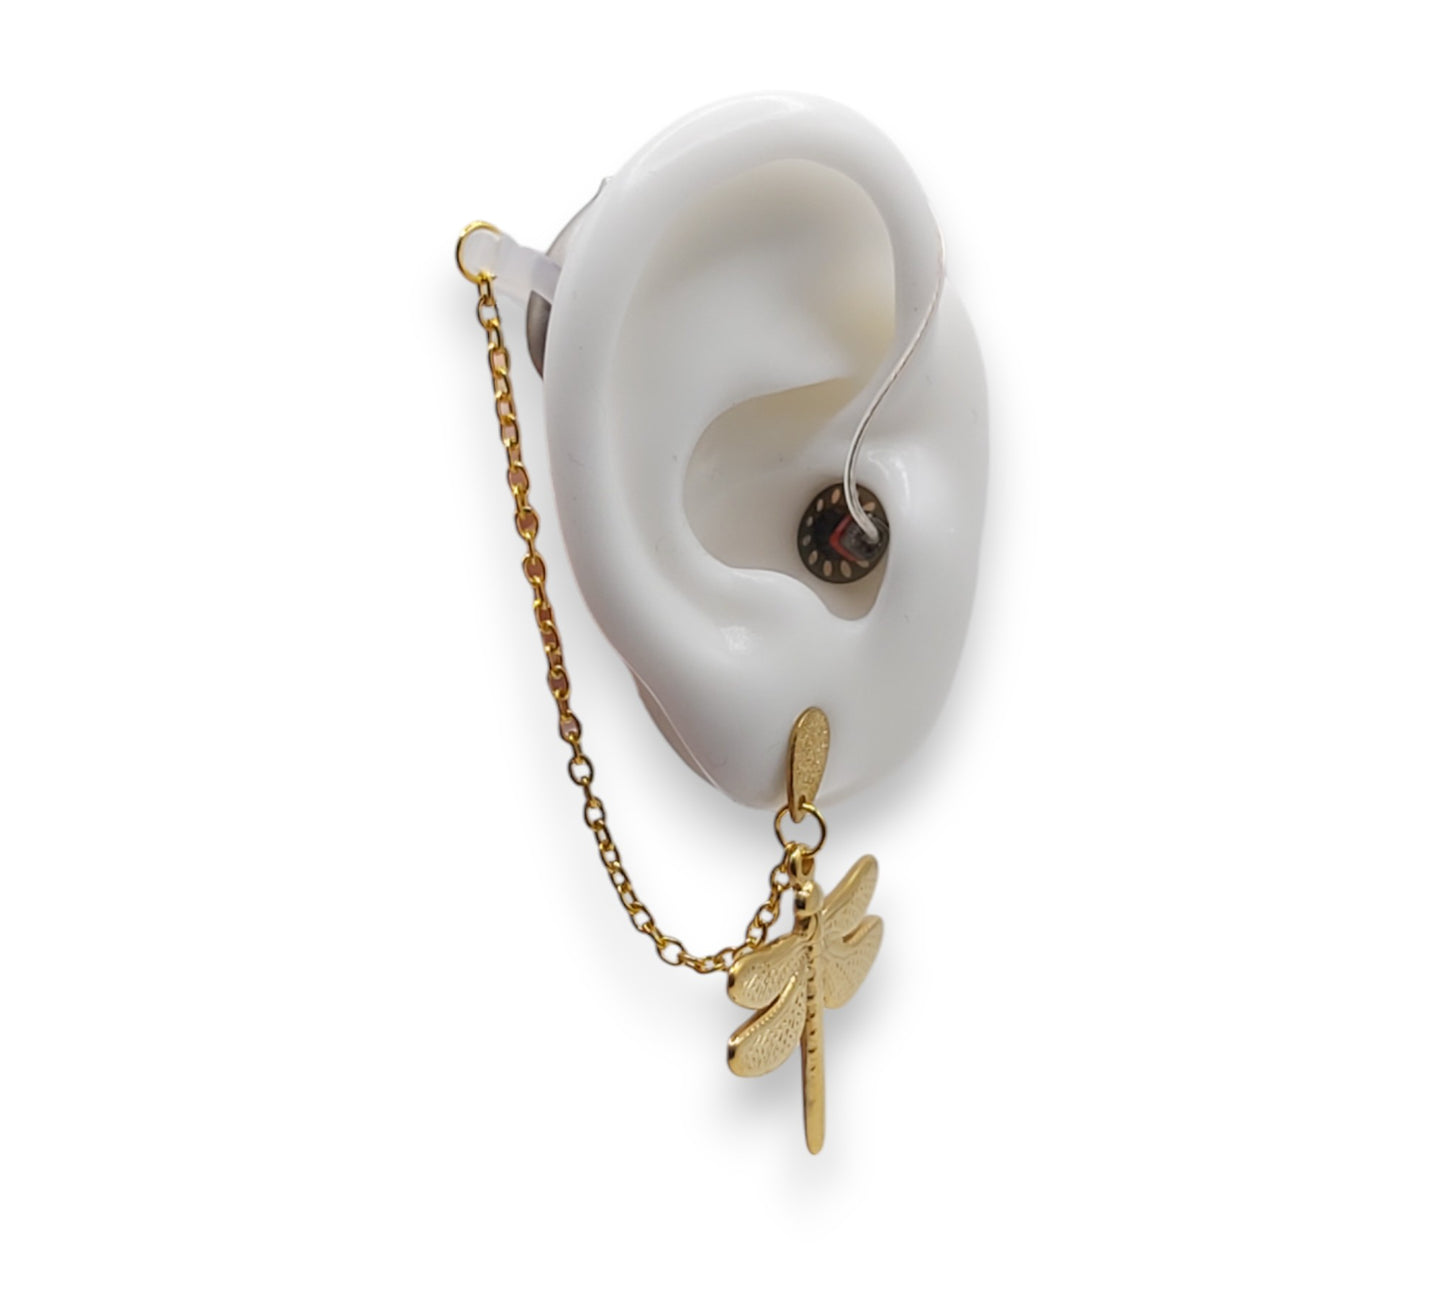 Libellen-Ohrringe für Hörgeräte